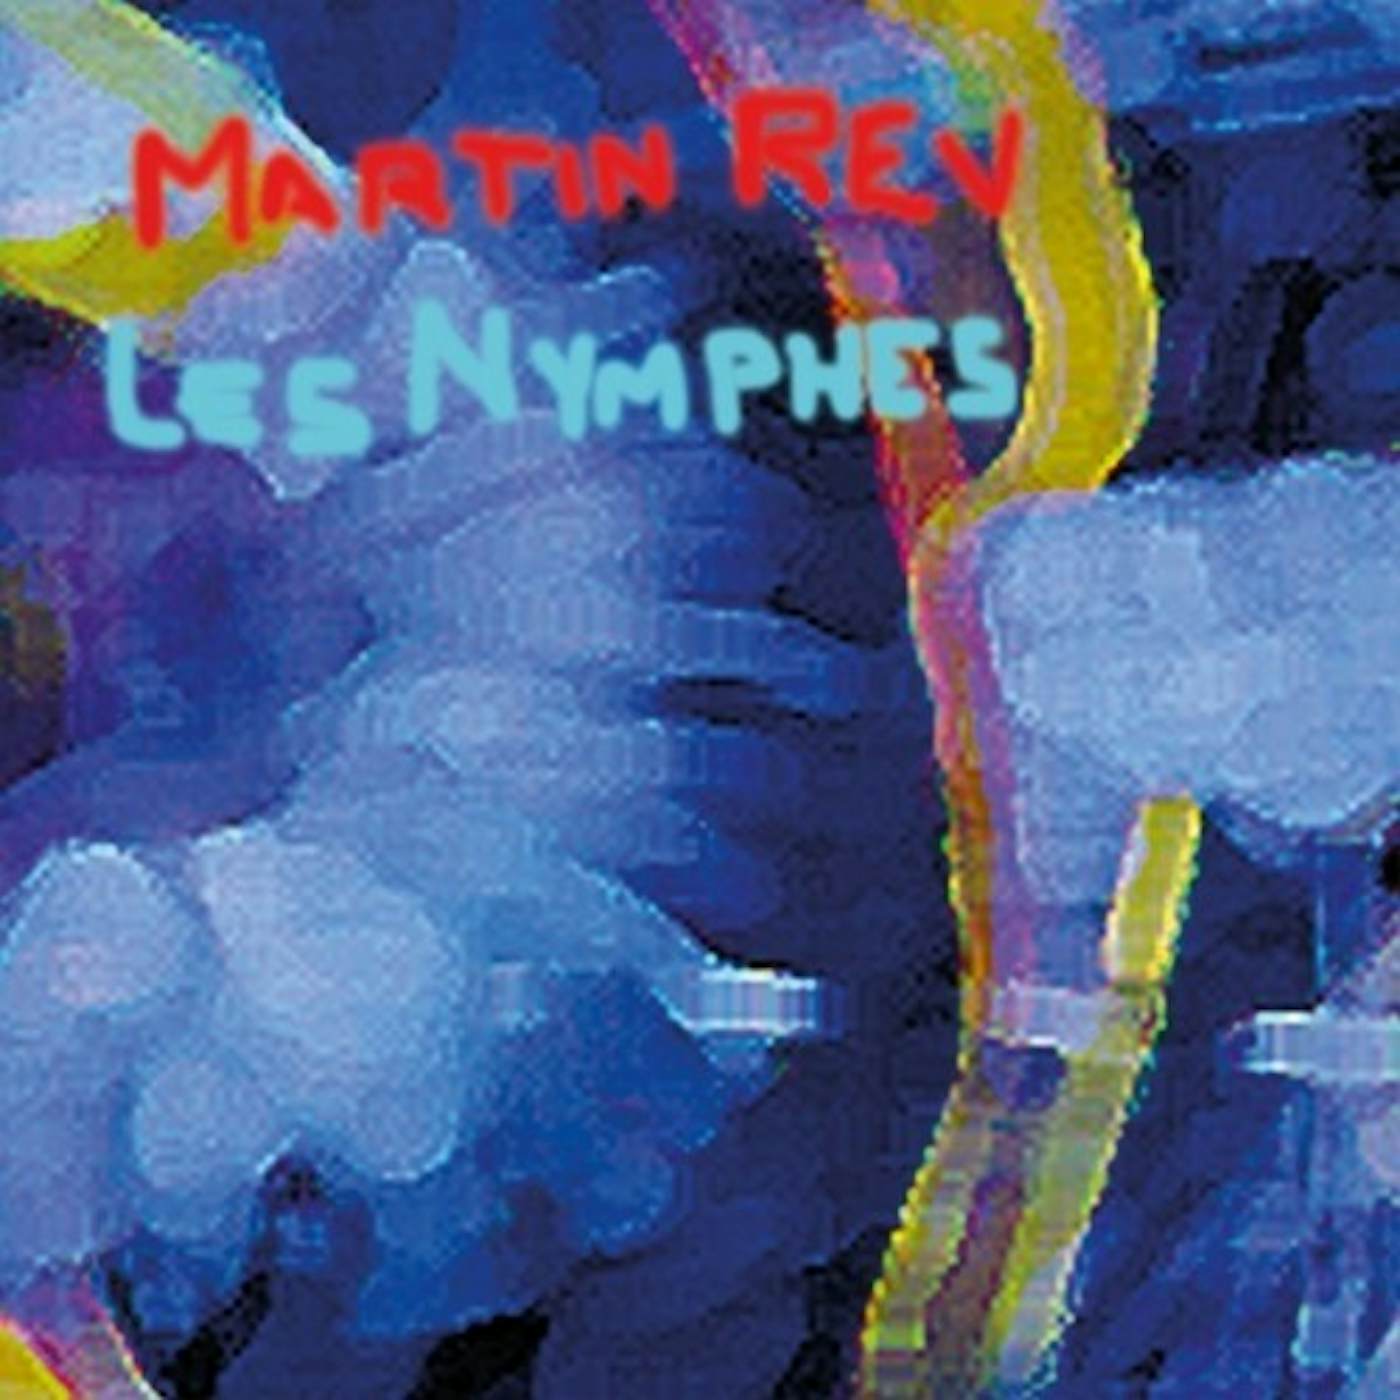 Martin Rev Les Nymphes Vinyl Record